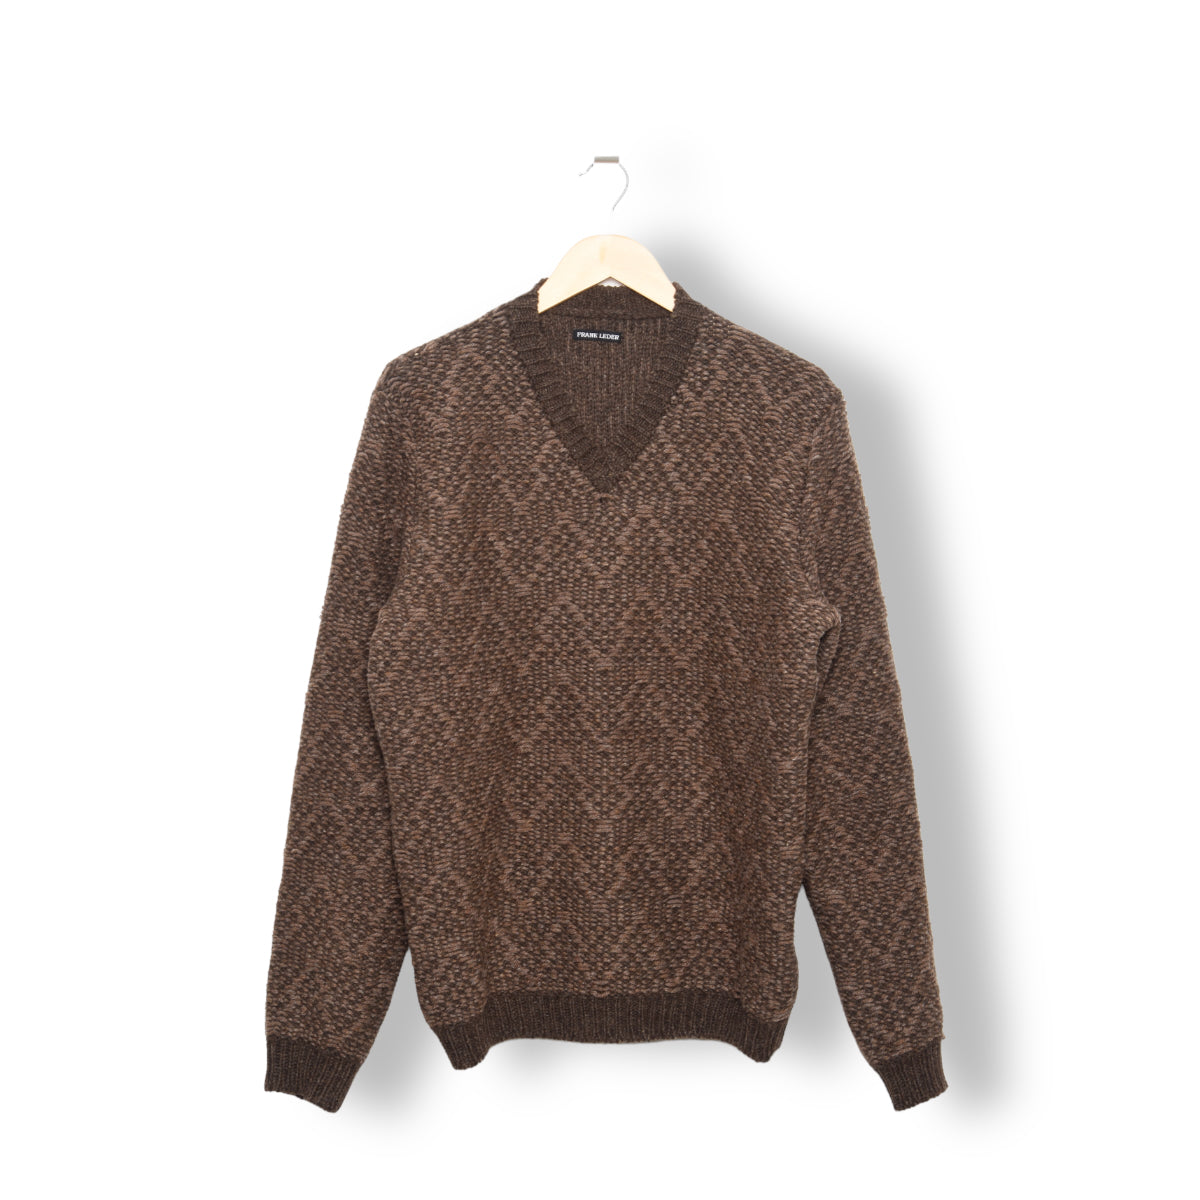 Frank Leder Handknitted Pullover V-Neck brown